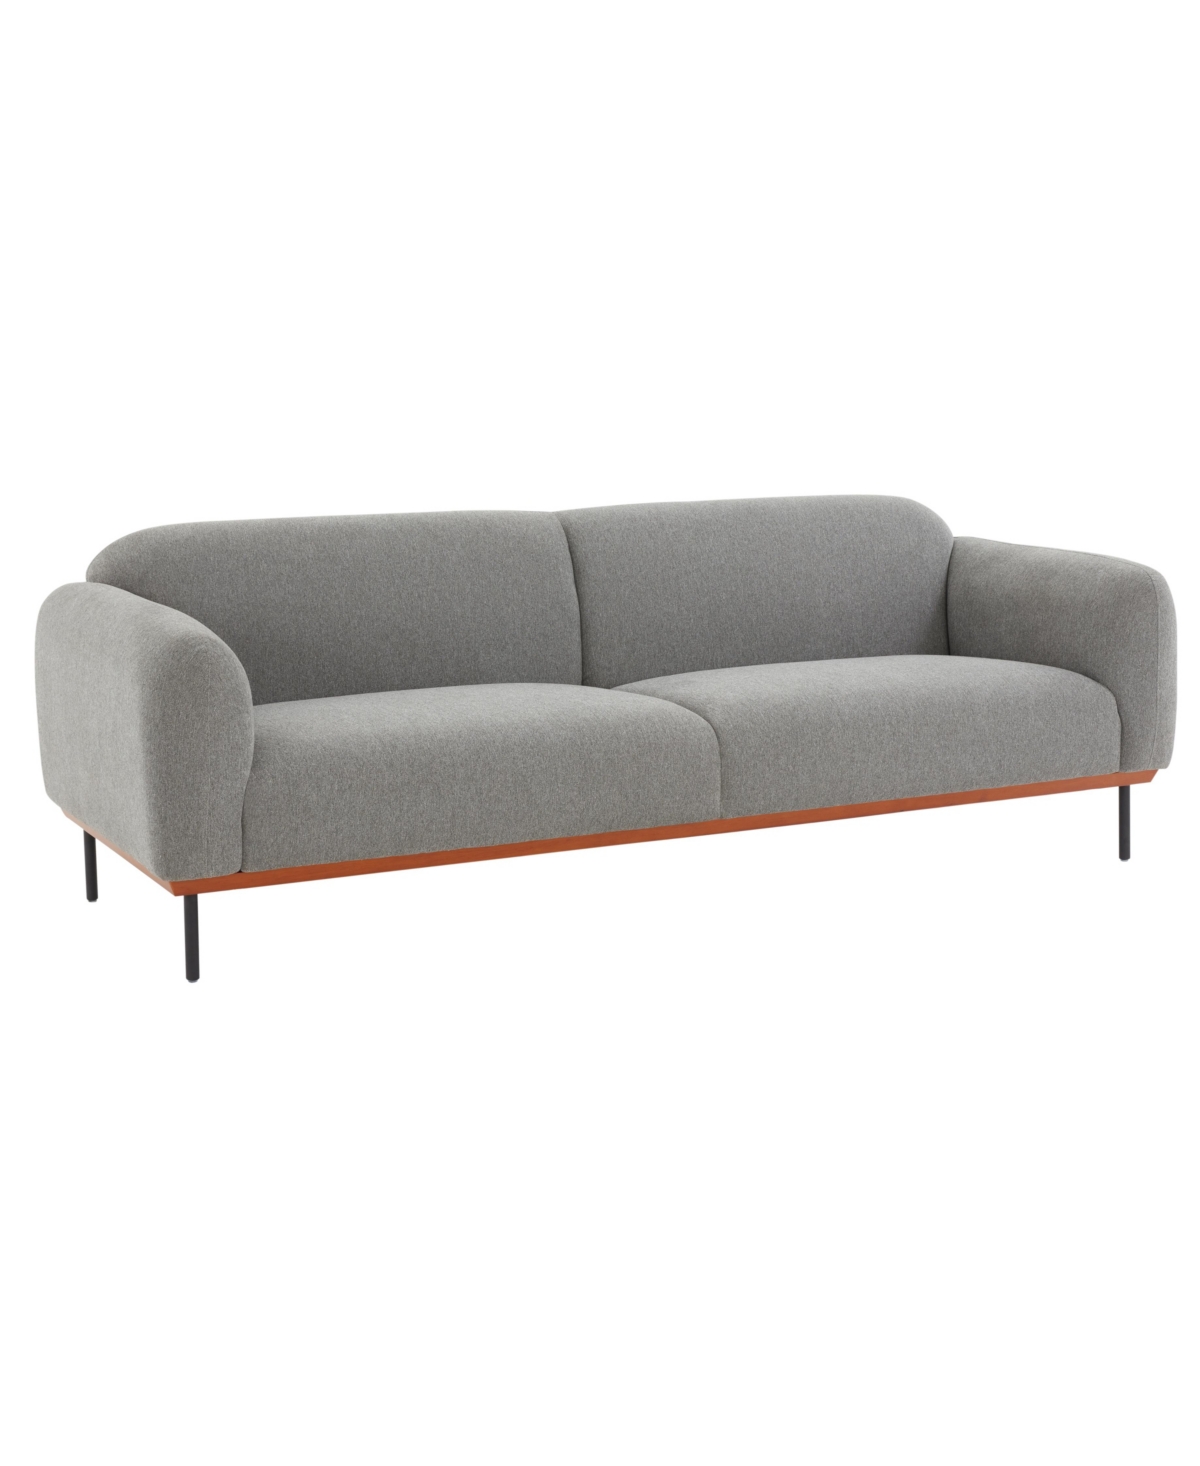 Safavieh Kaycee 90" Linen Sofa In Gray